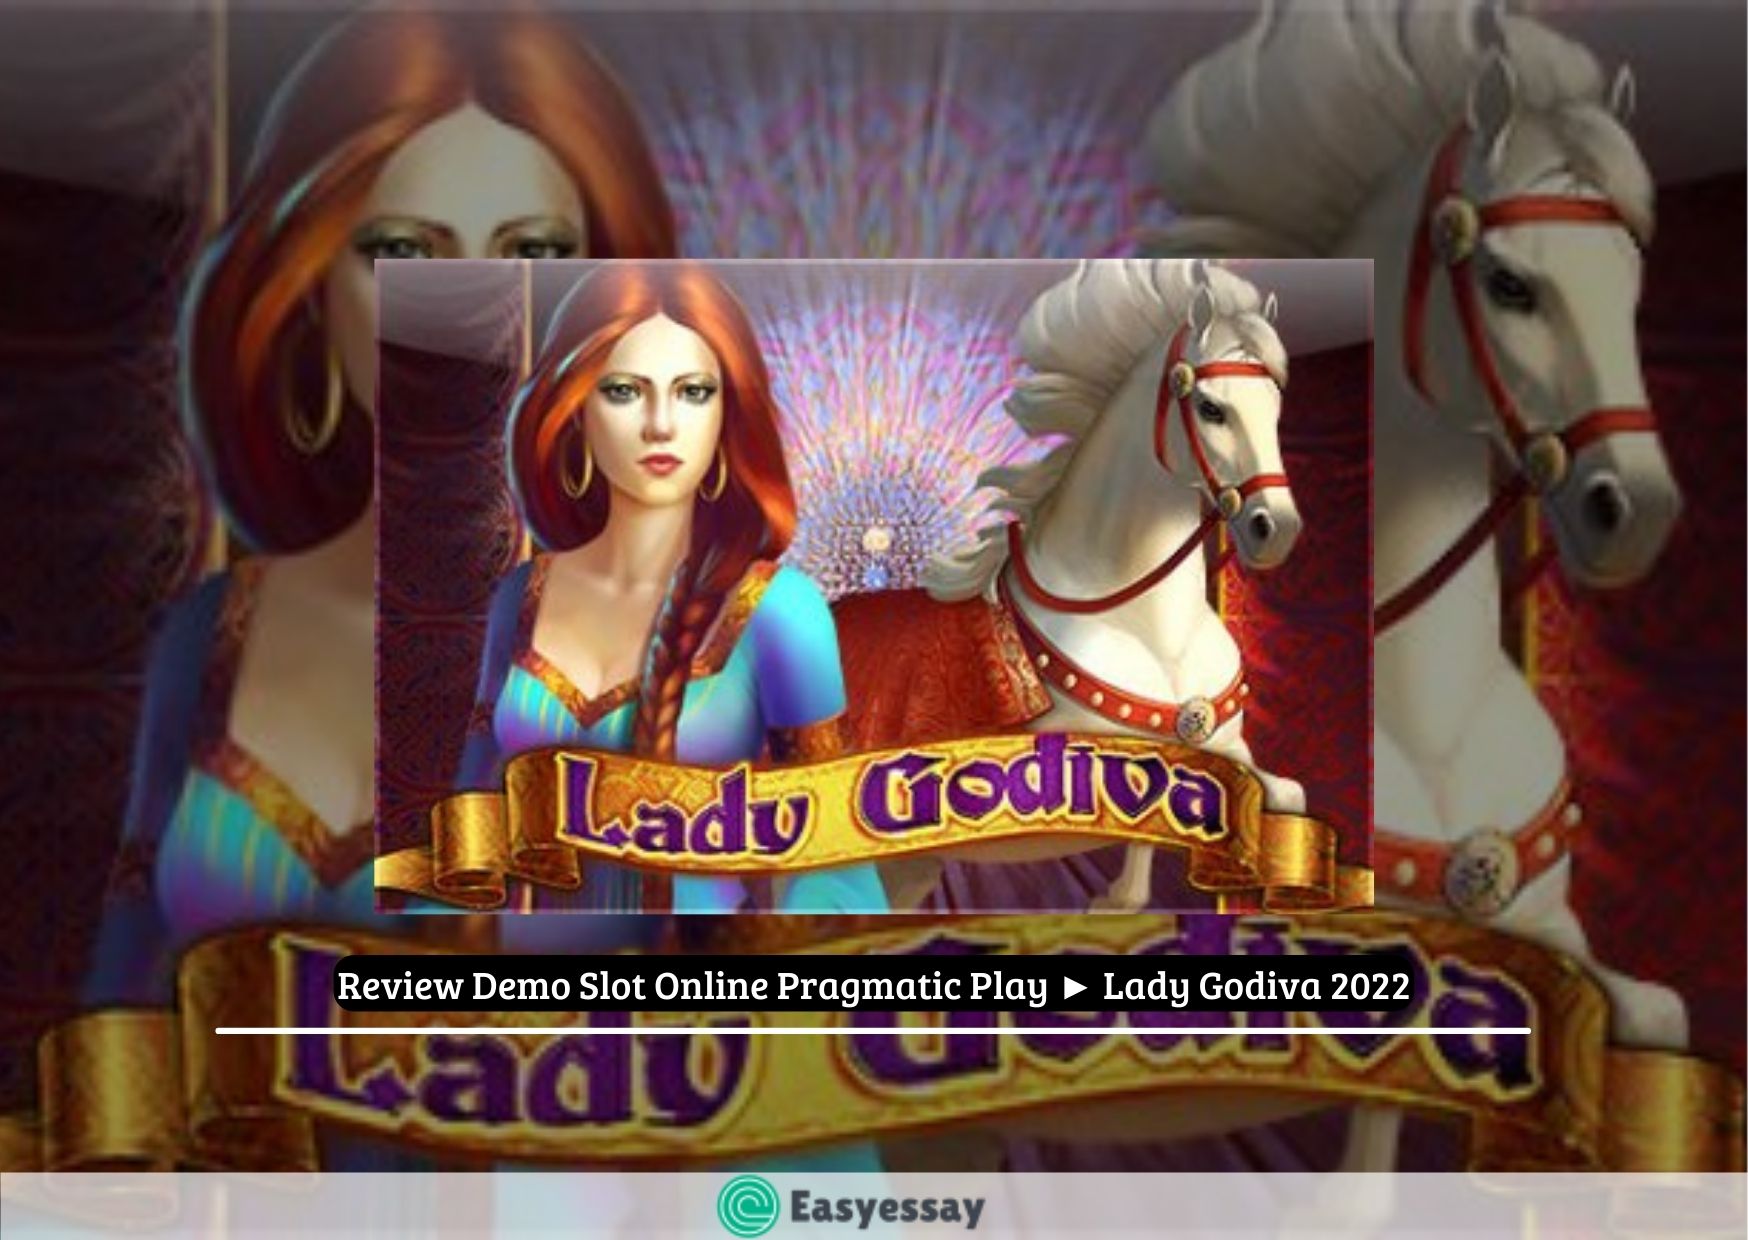 Review Demo Slot Online Pragmatic Play ► Lady Godiva 2022